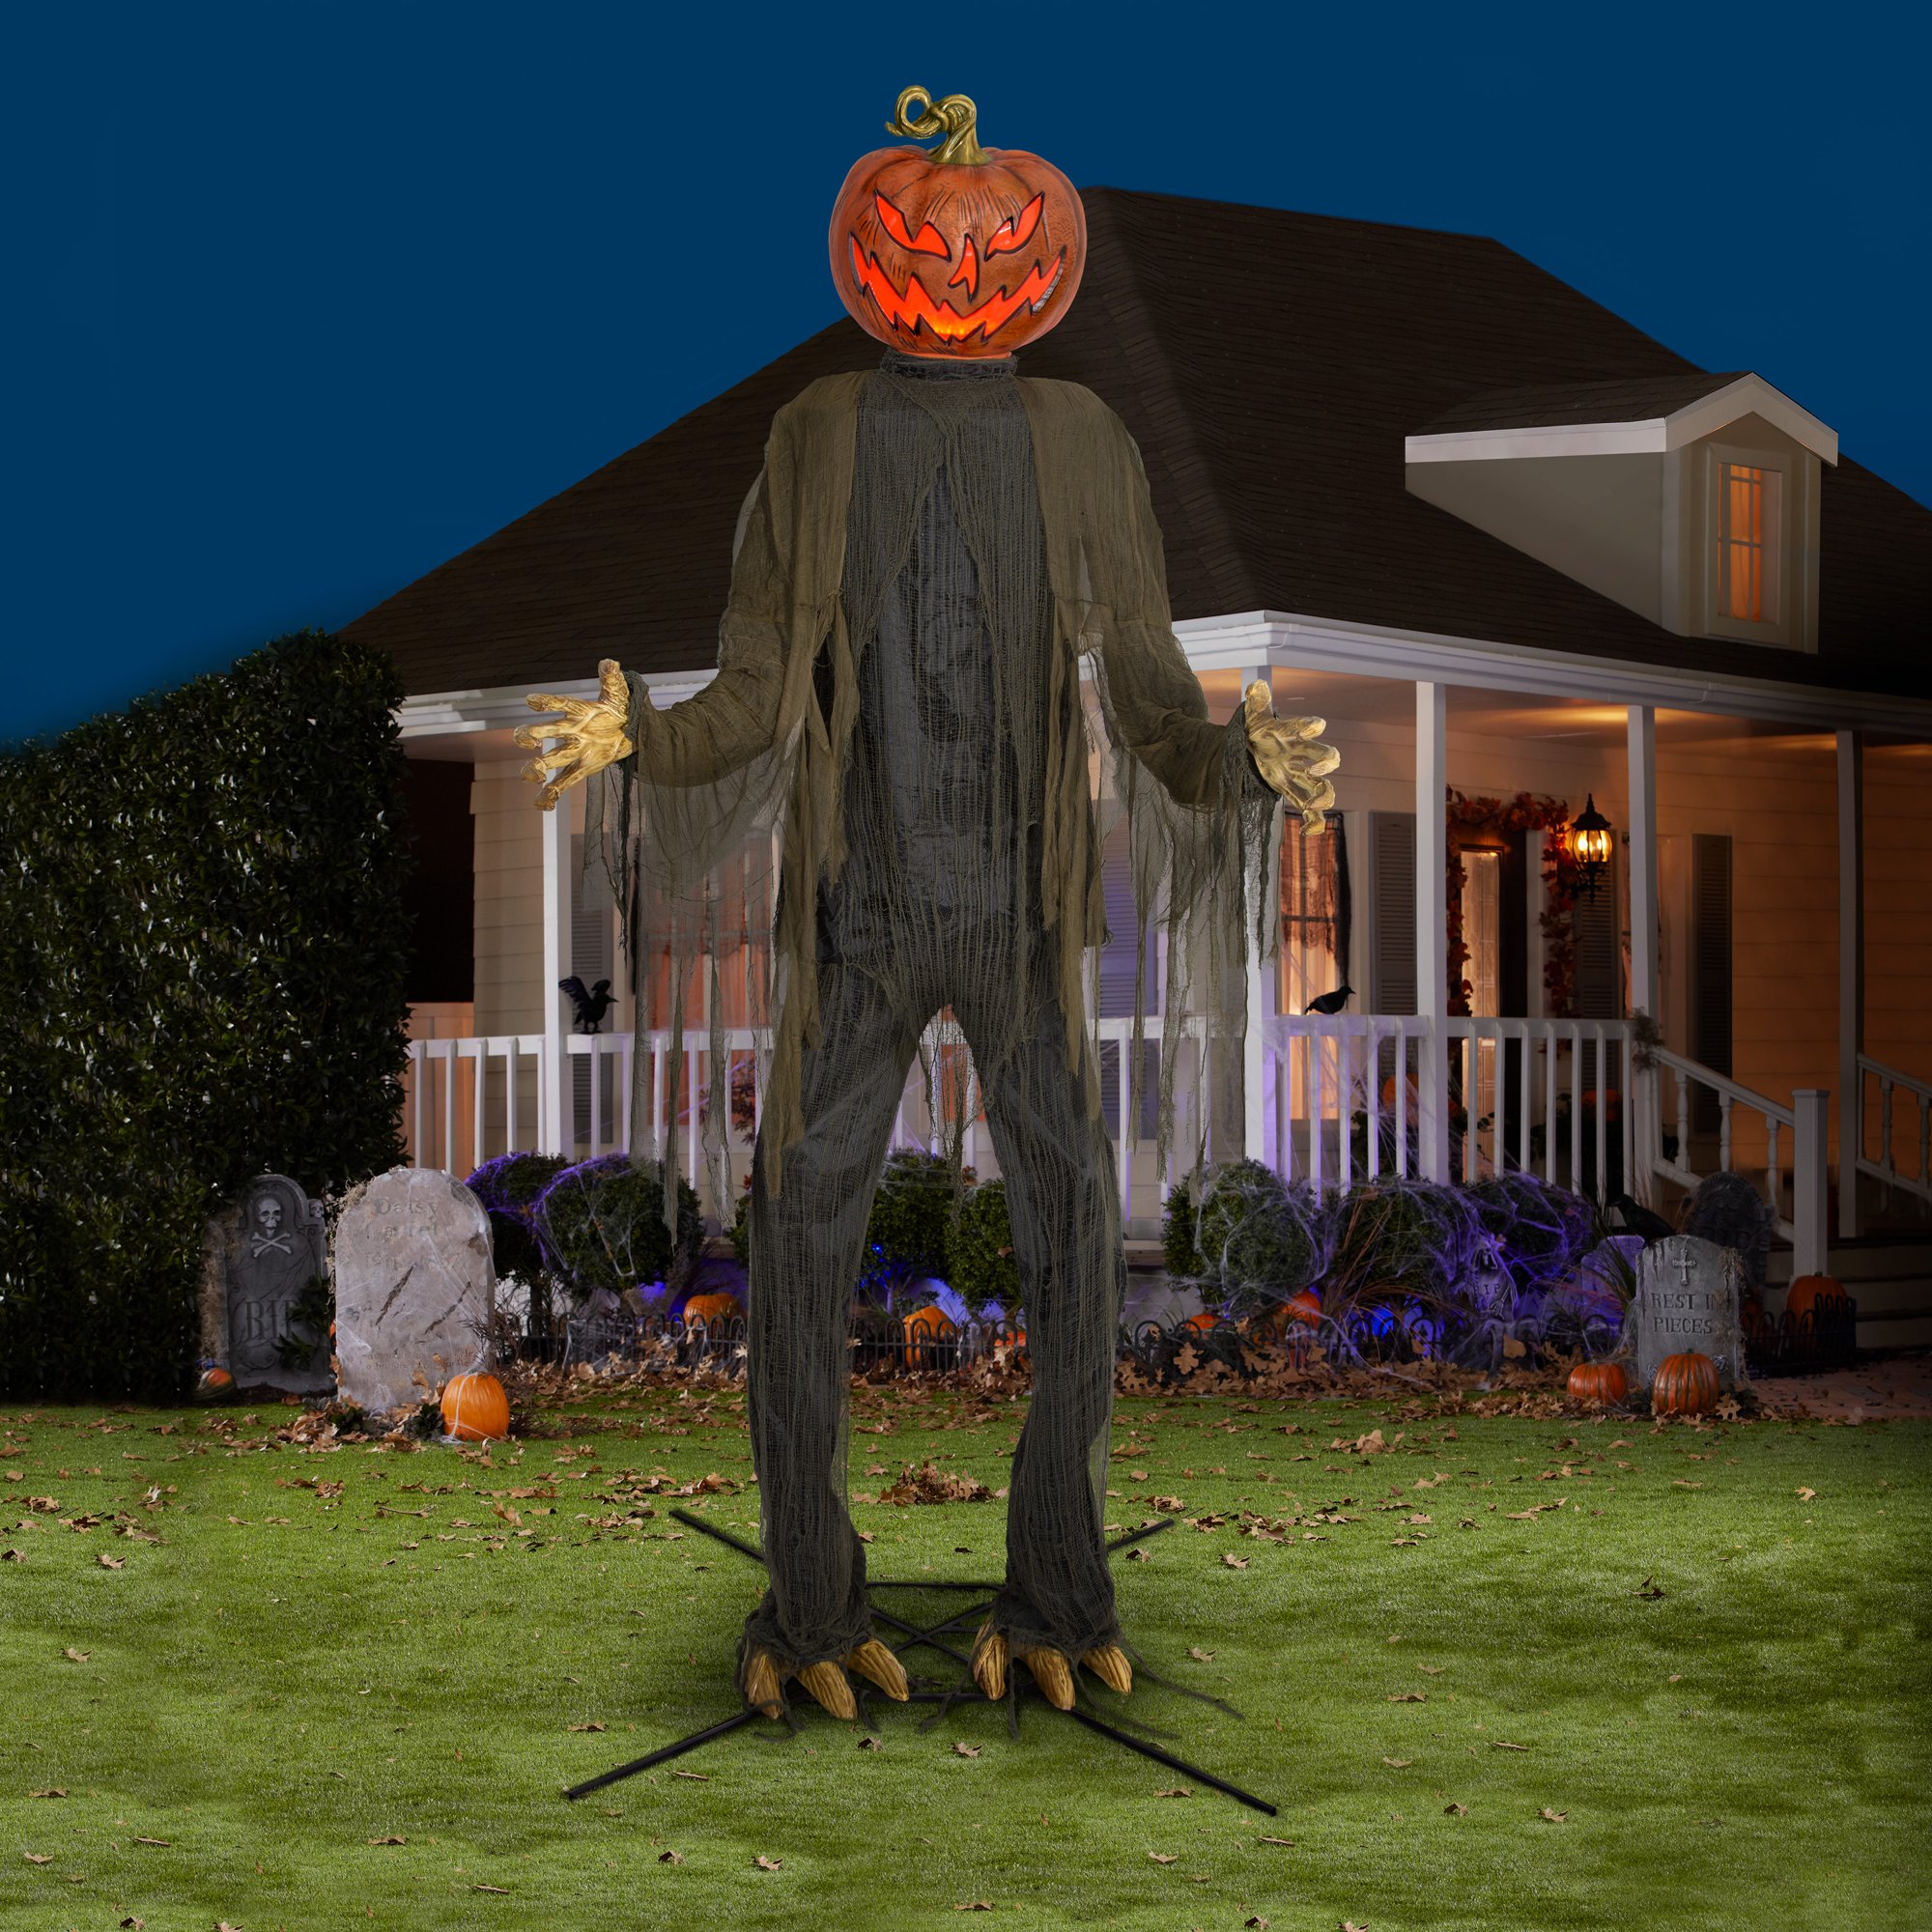 Top 5 Outdoor Halloween Decorations Including 12-ft Animated Pumpkin ...